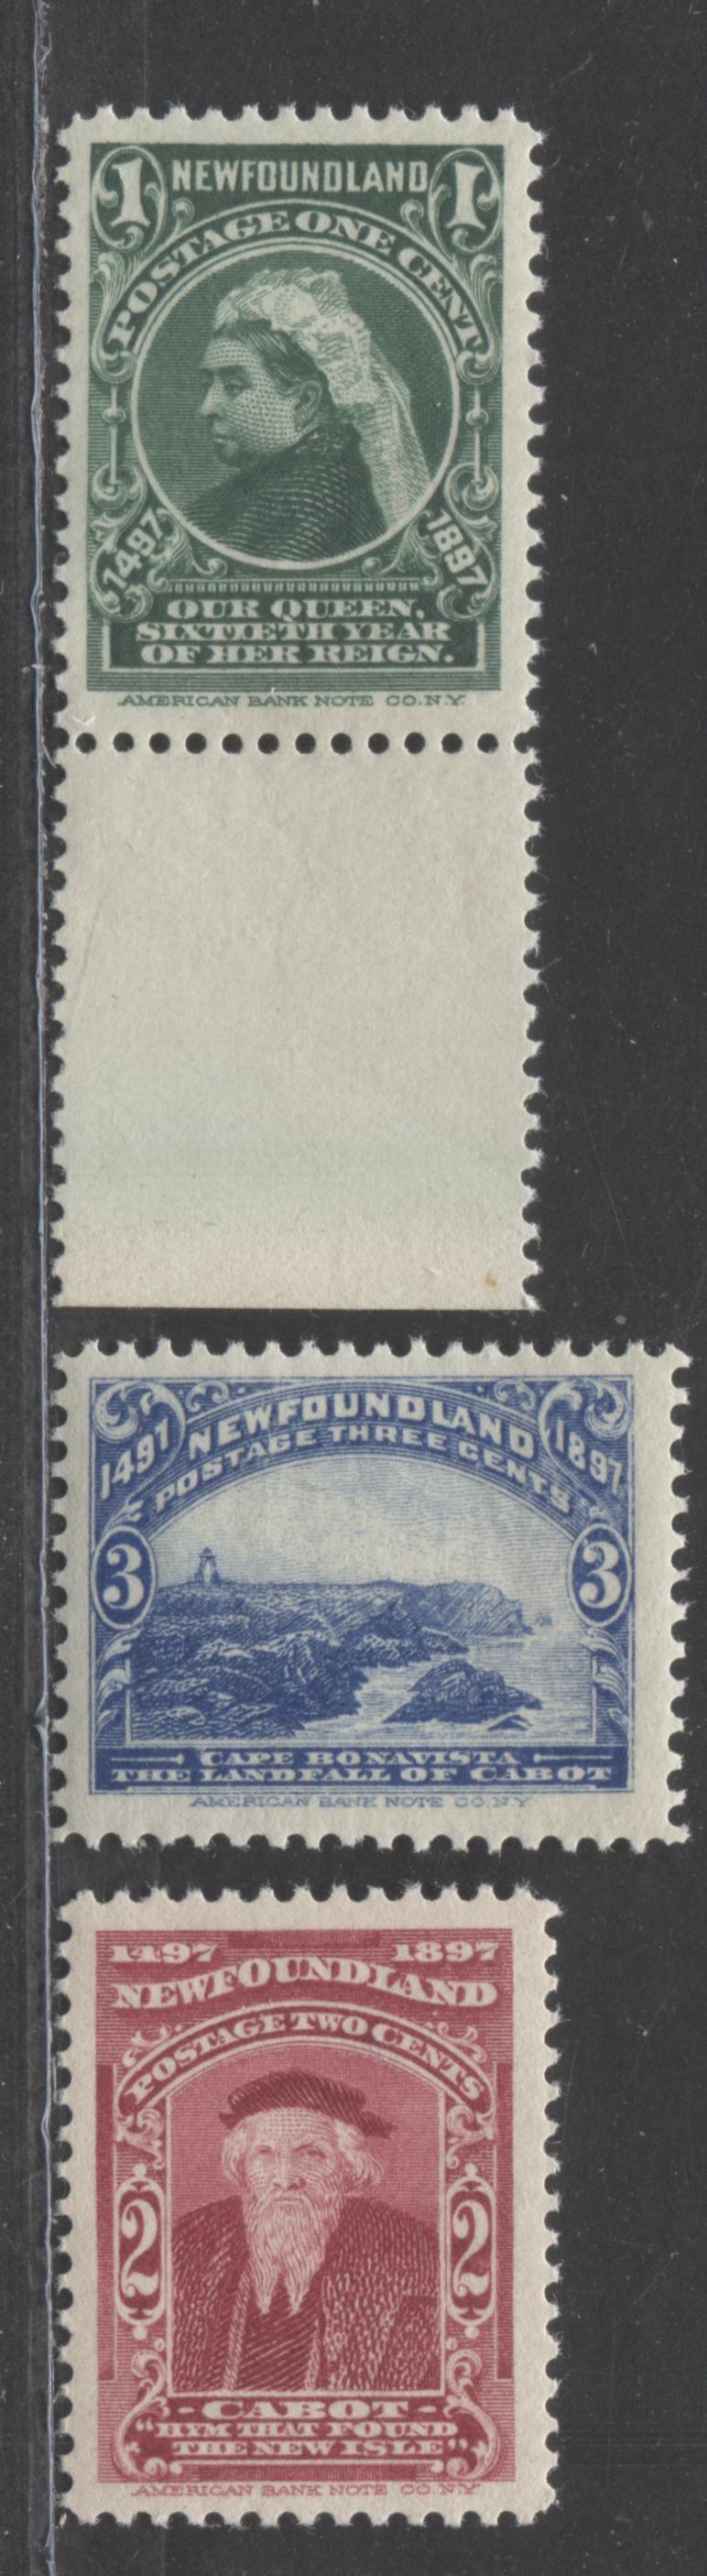 Lot 404 Newfoundland #61-63 1c-3c Dark green - Ultramarine Queen Victoria - Cape Bonavista, 1897 John Cabot Issue, Three VFNH Examples